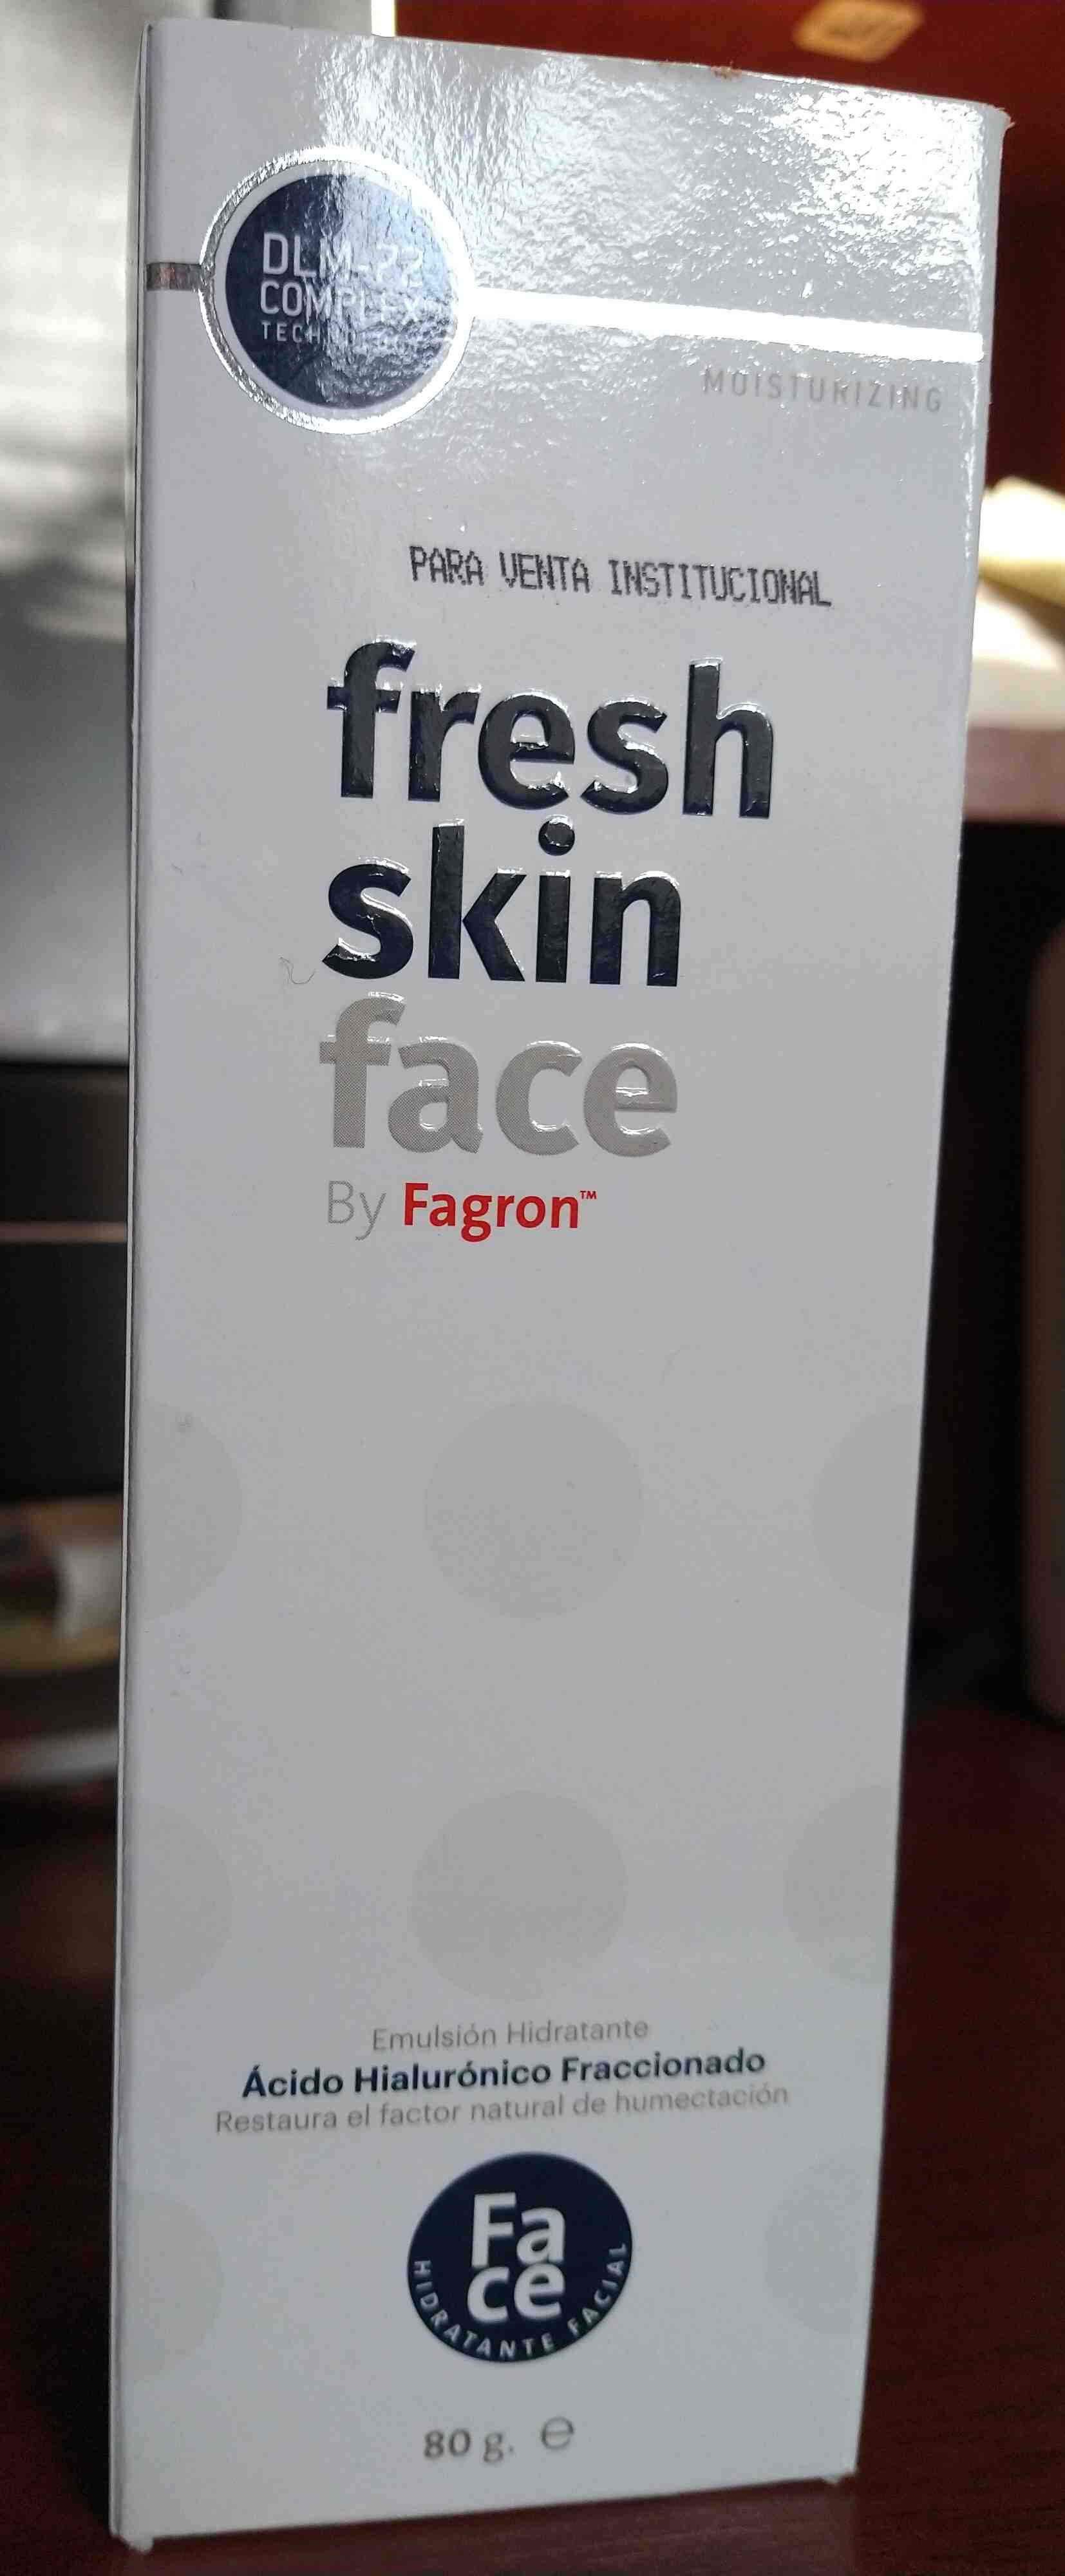 fresh skin face - Product - en